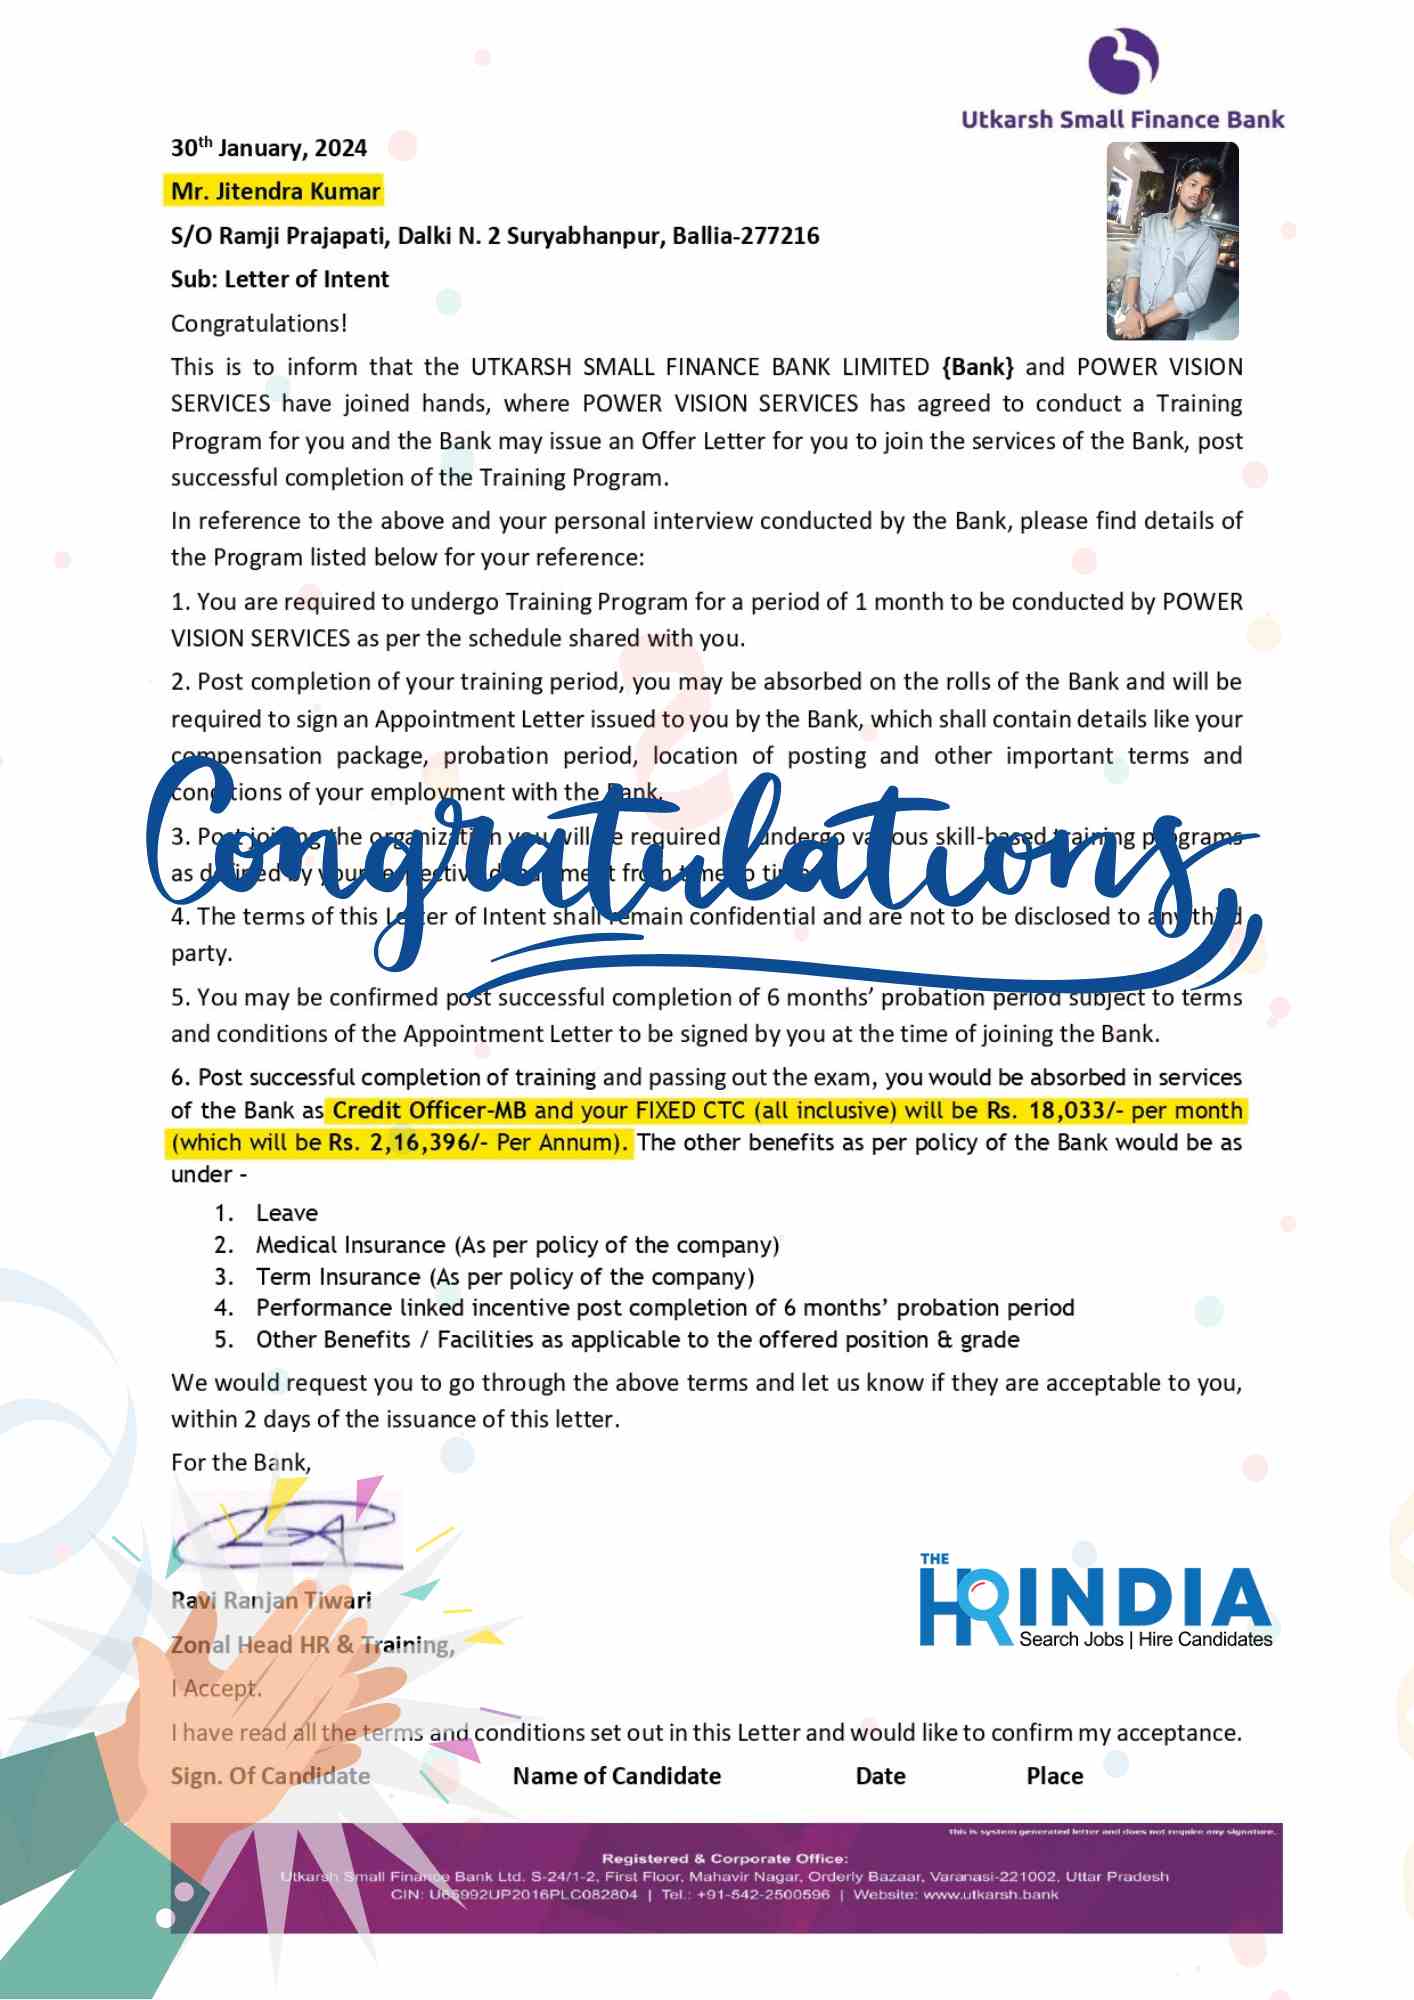 Jitendra Kumar  | The HR India